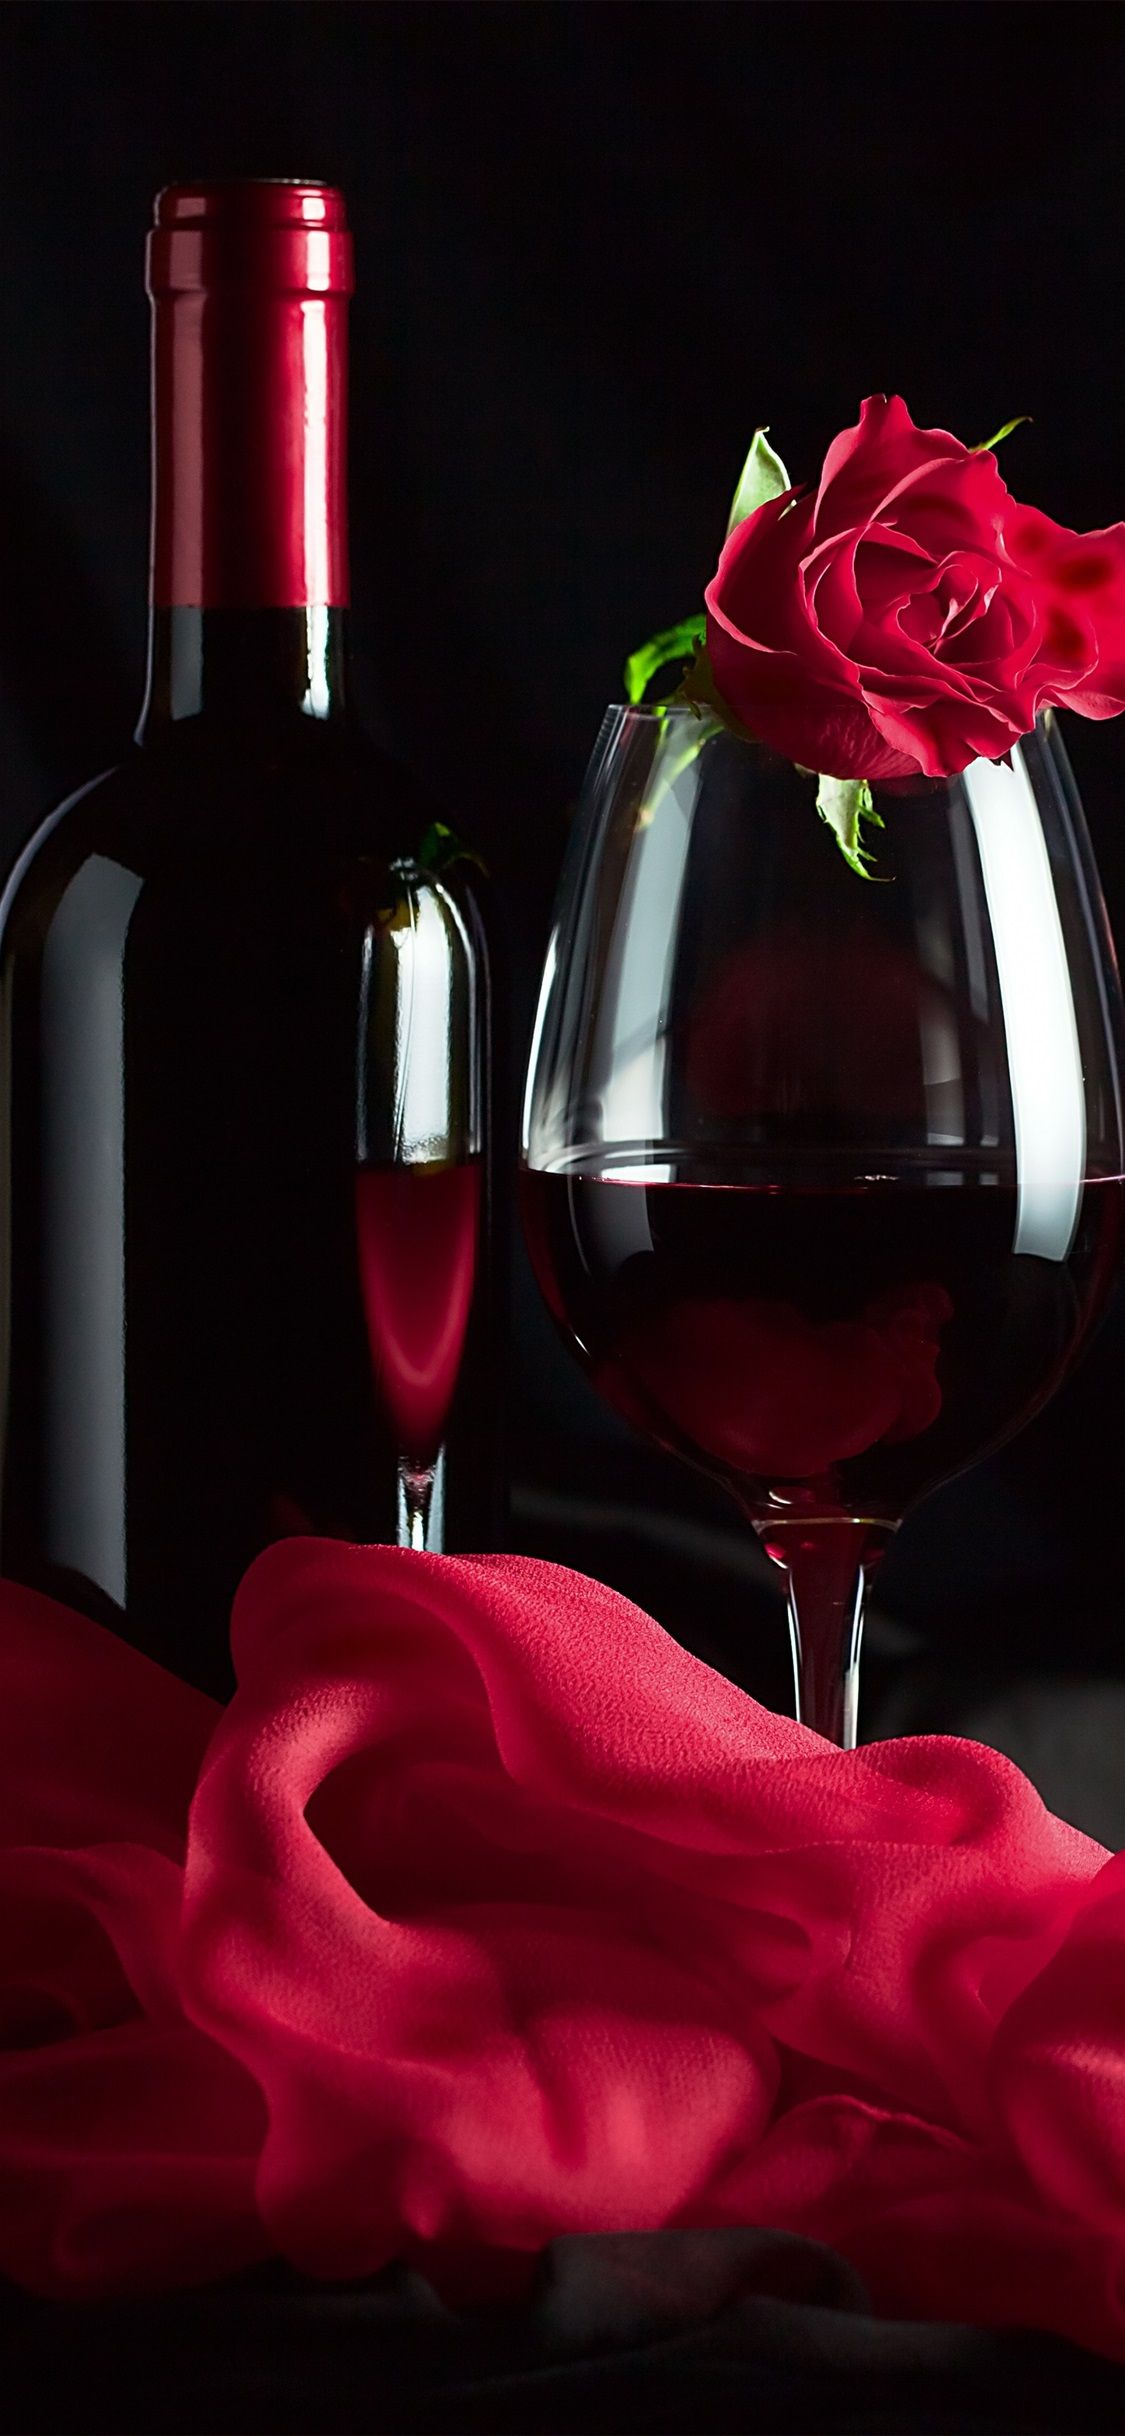 Wallpaper Red wine, rose, silk, romantic 3840x2160 UHD 4K Picture, Image